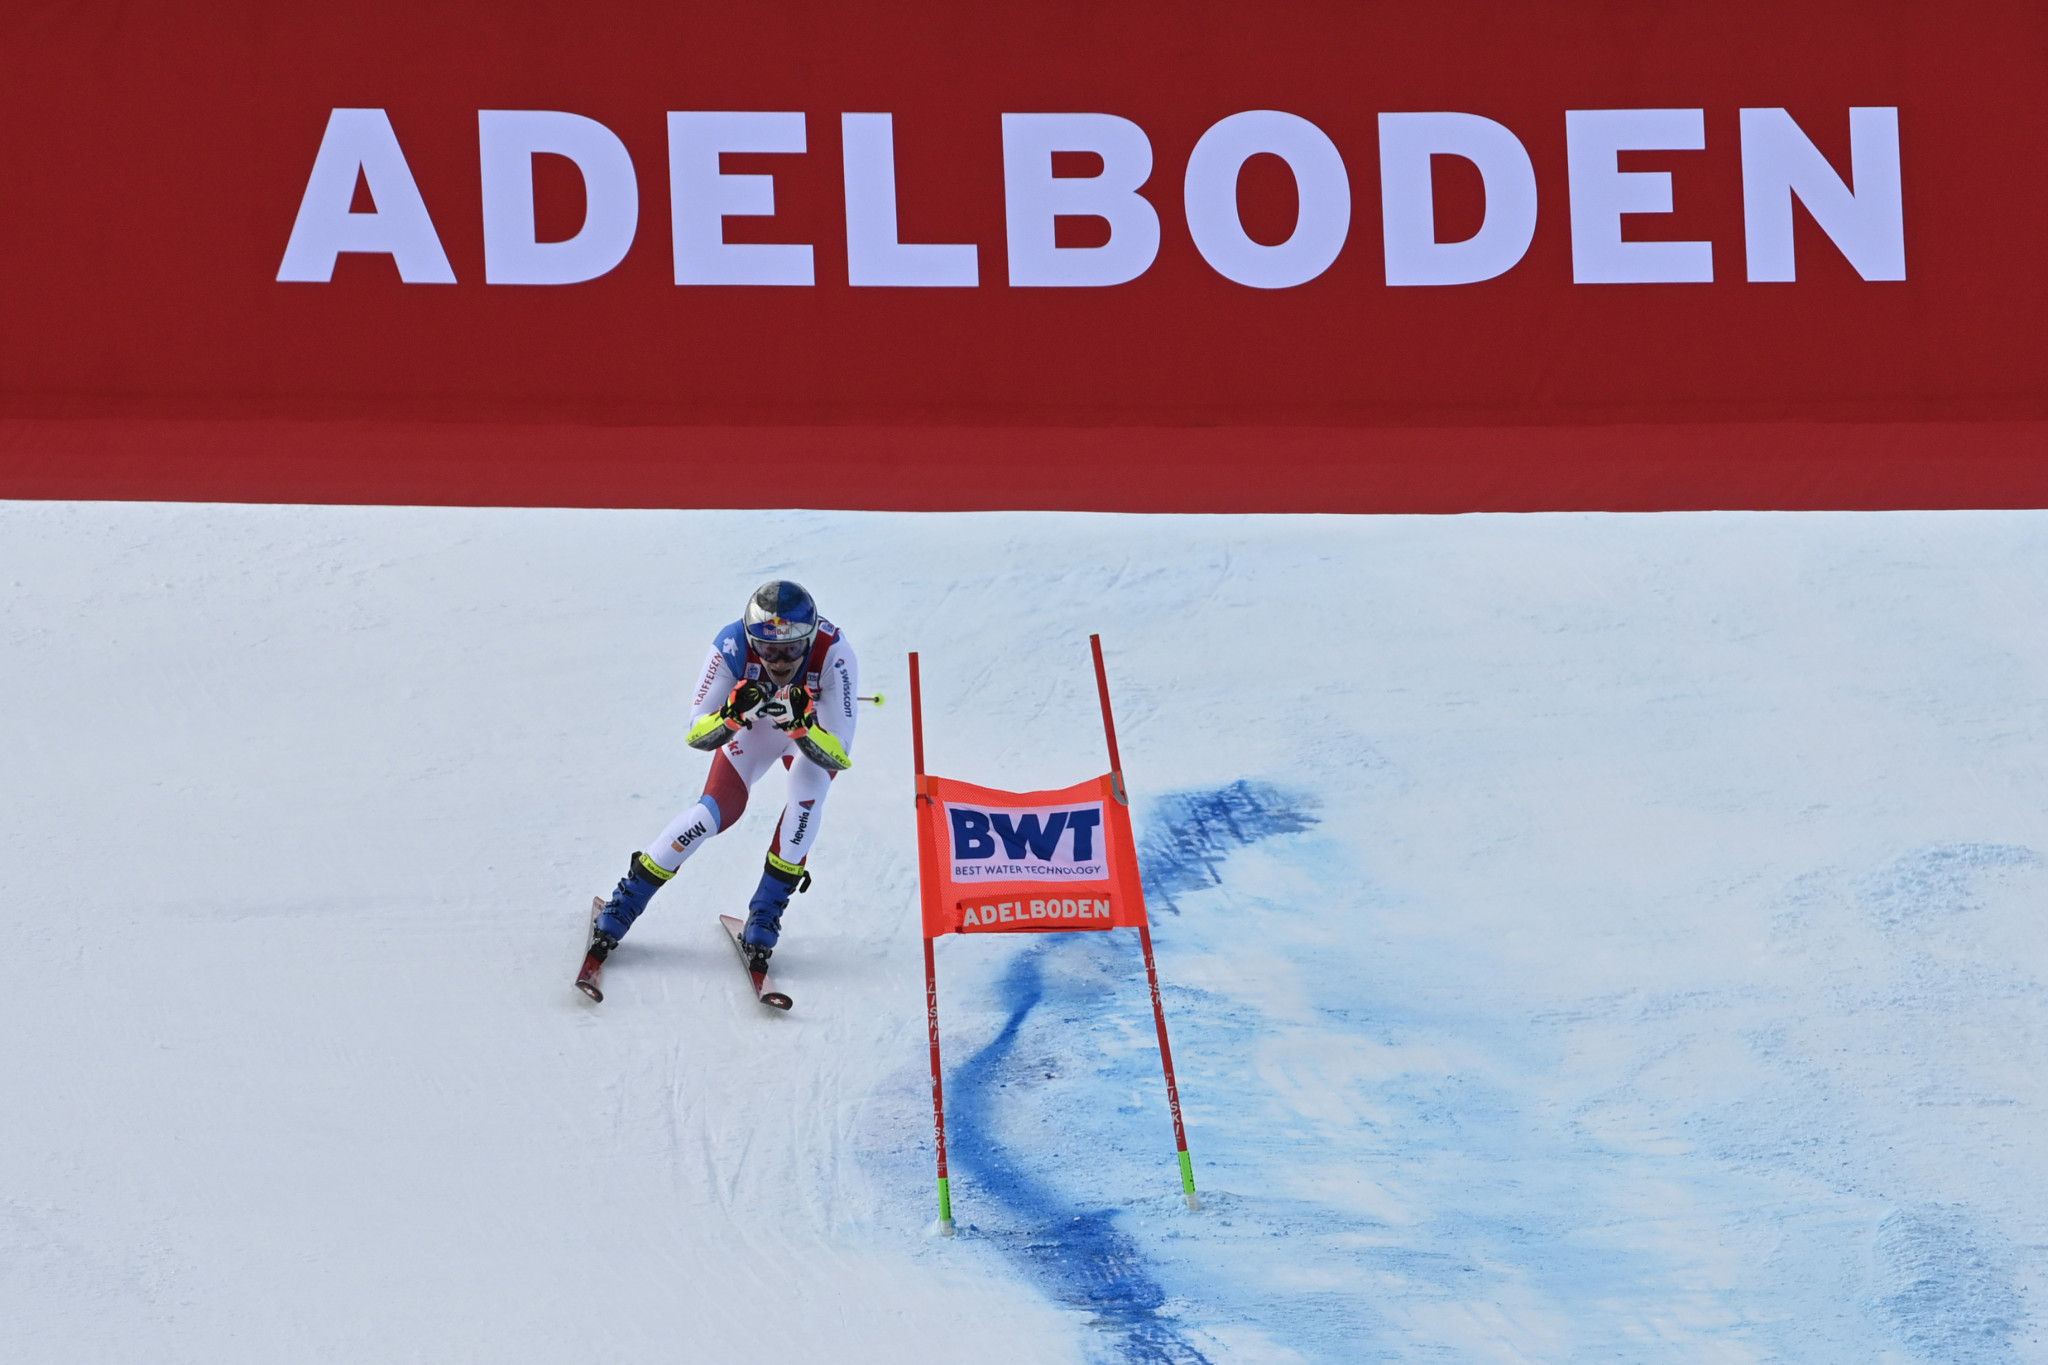 Marco Odermatt won gold in the giant slalom in Adelboden ©Getty Images